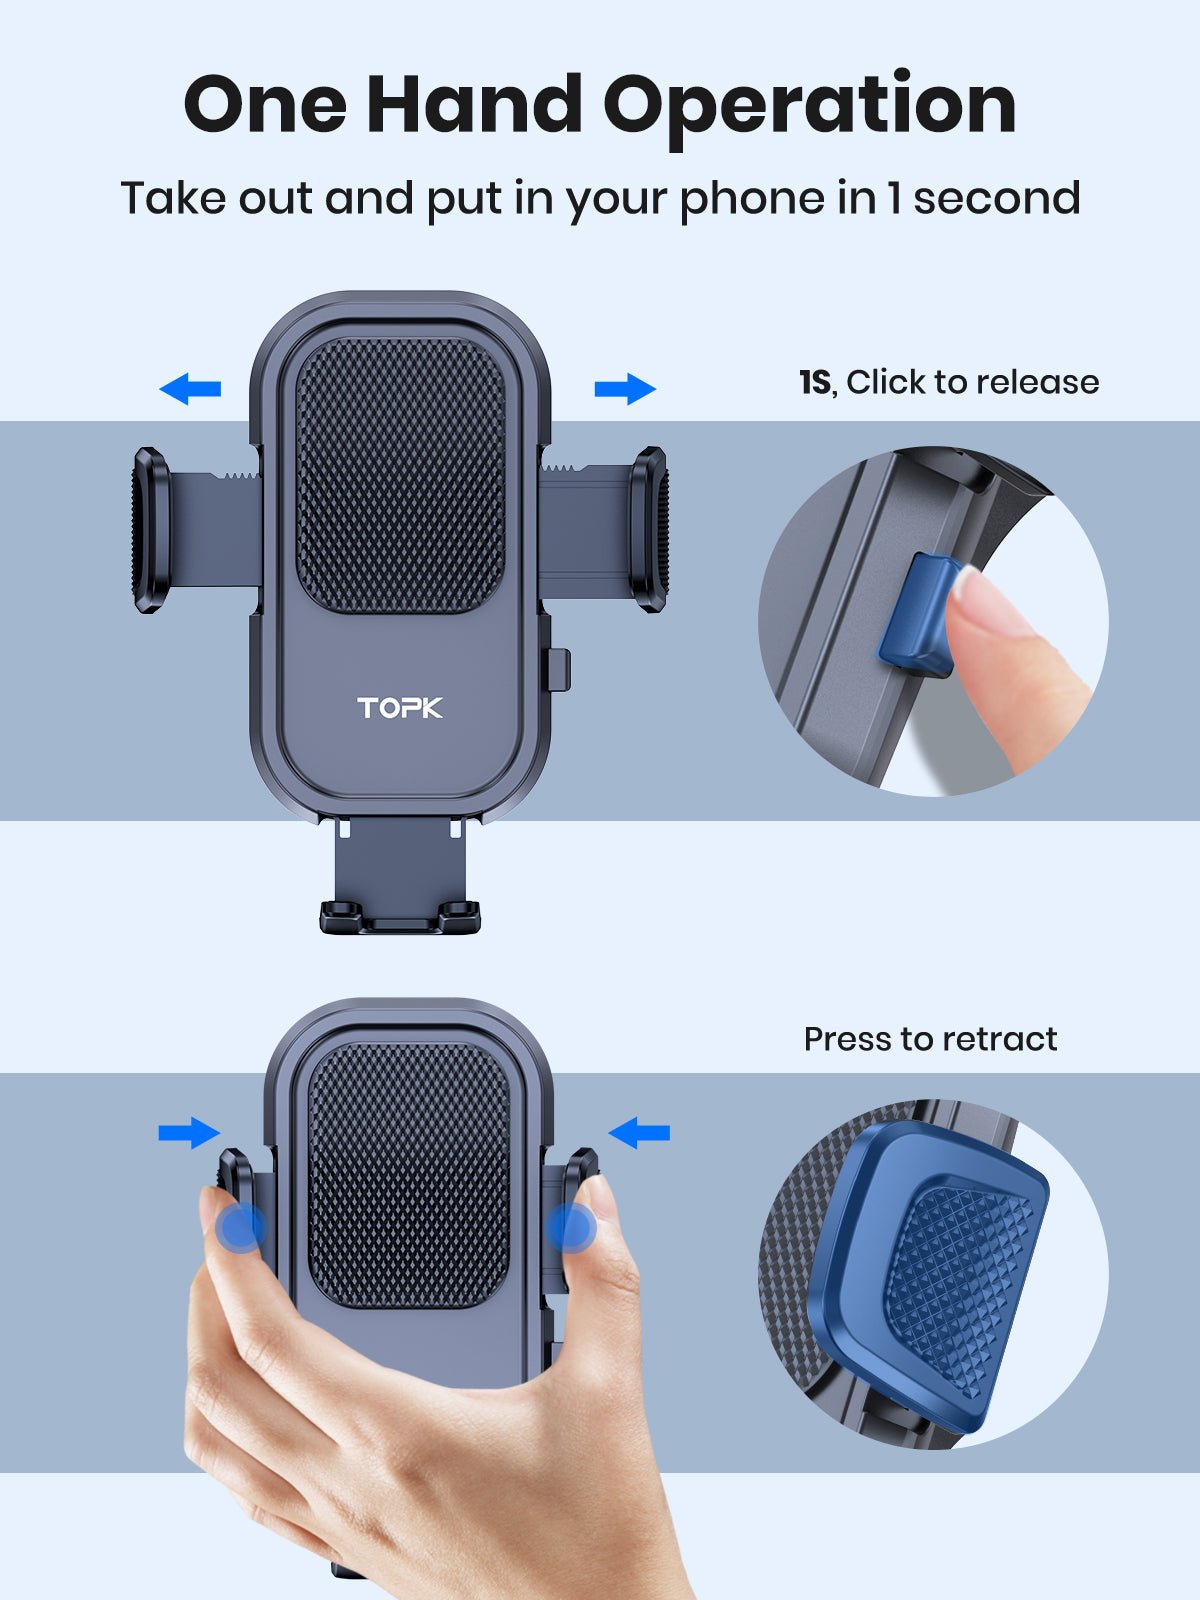 TOPK D40-G Phone Holder for Car Air Vent - TOPK Official Store